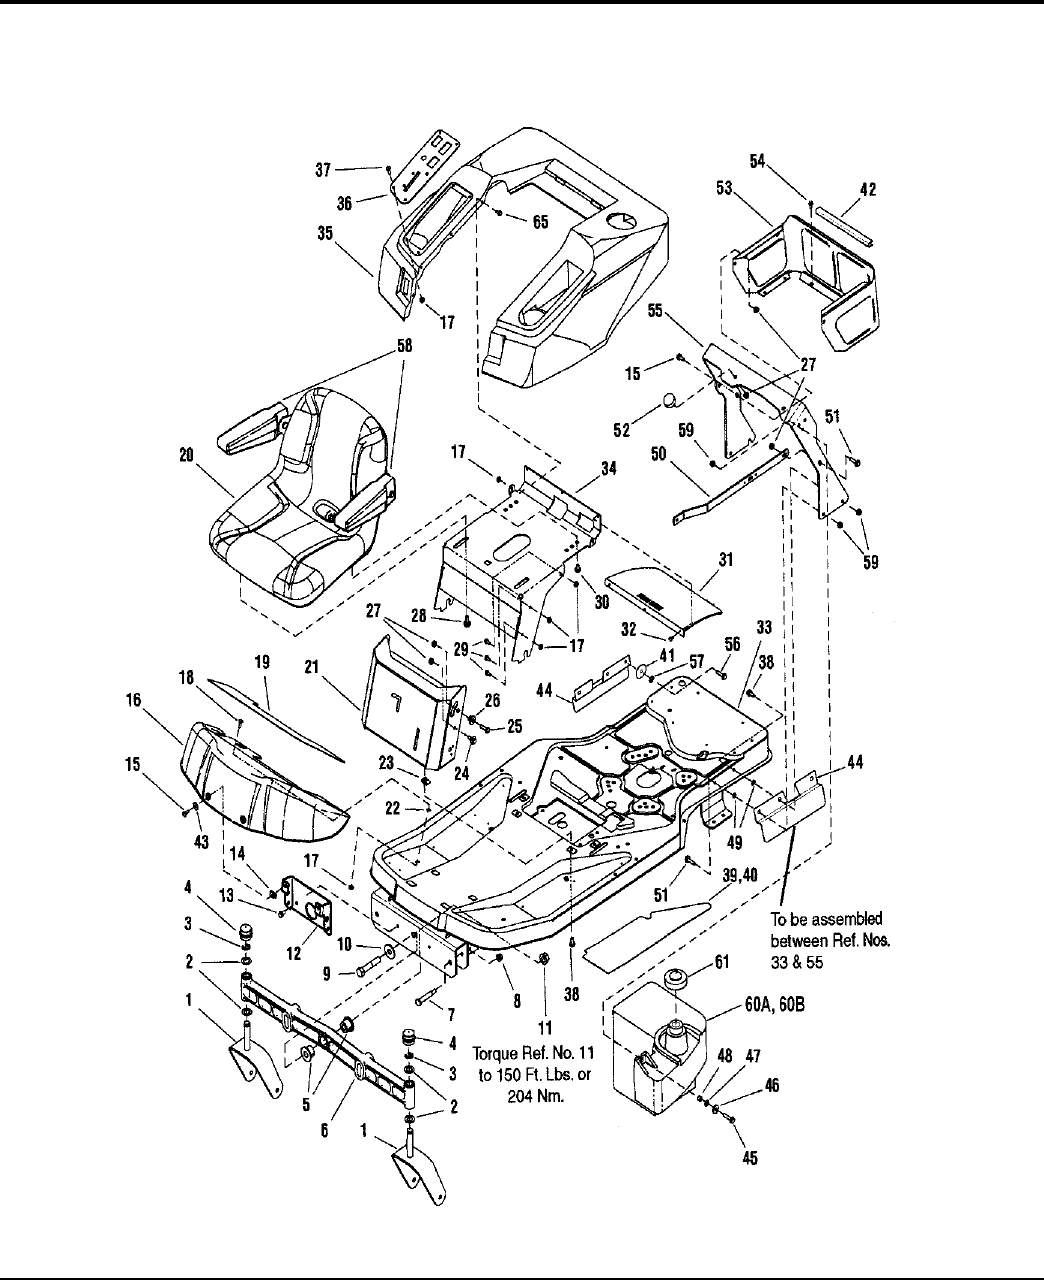 Simplicity 7800360 Axion Parts Manual 7102825 Series Lawn Tractor & Mower  Decks  Ztl7000 Wiring Diagram.pdf    UserManual.wiki